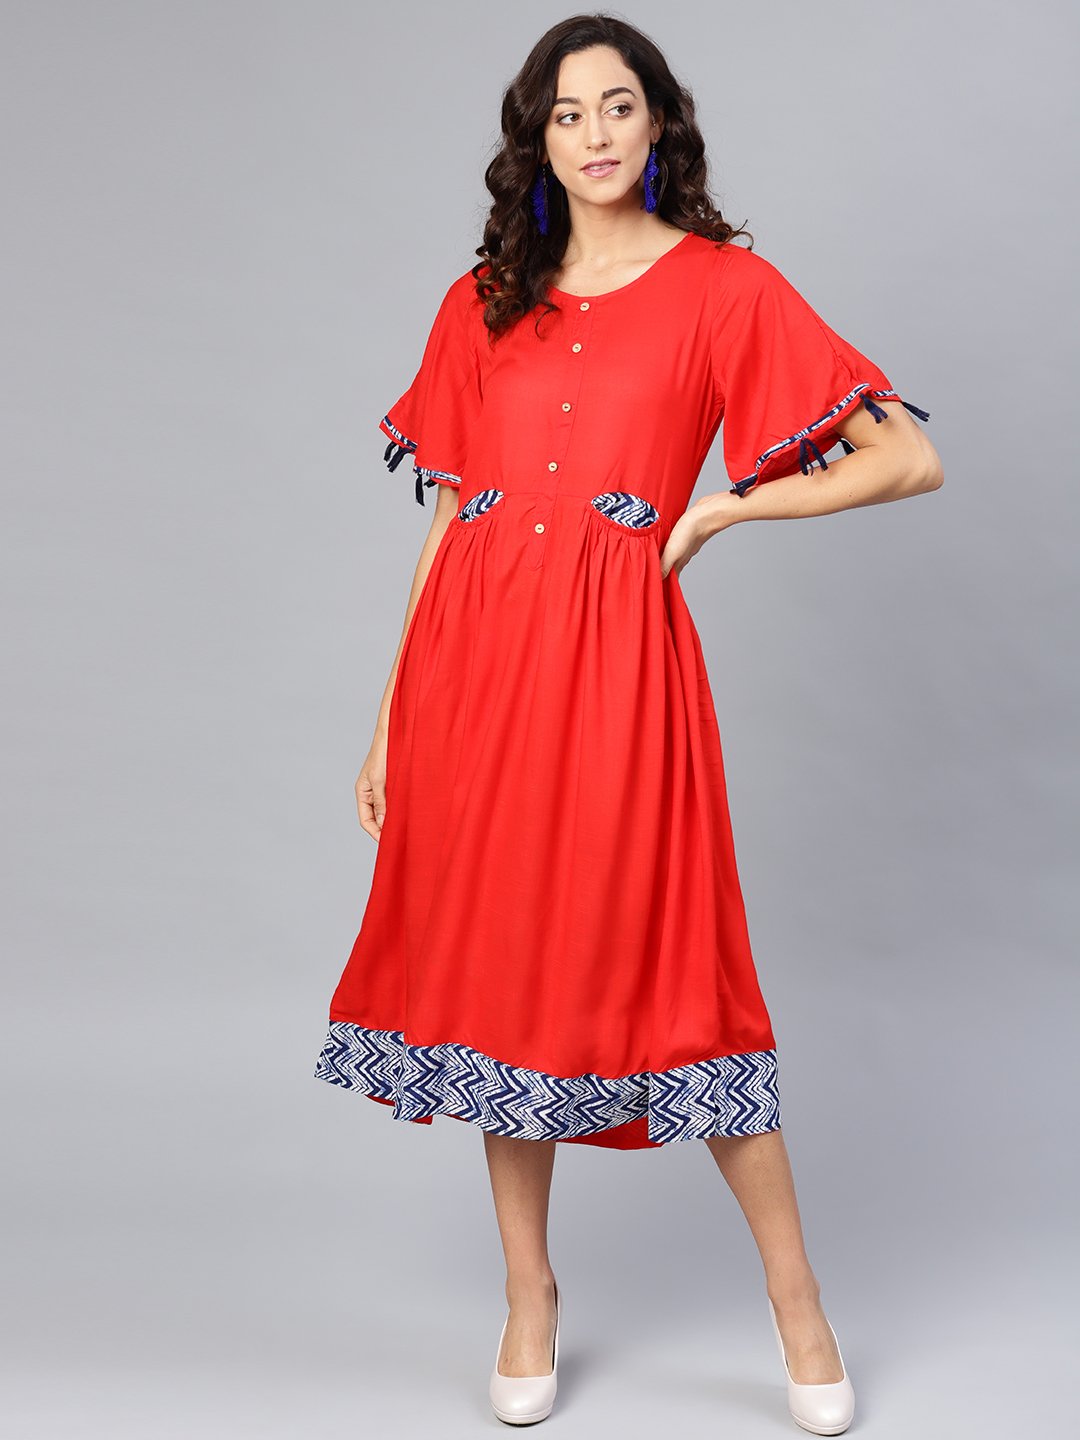 Women's Red Cotton Solid Ballon Sleeve Round Neck Dress - Myshka